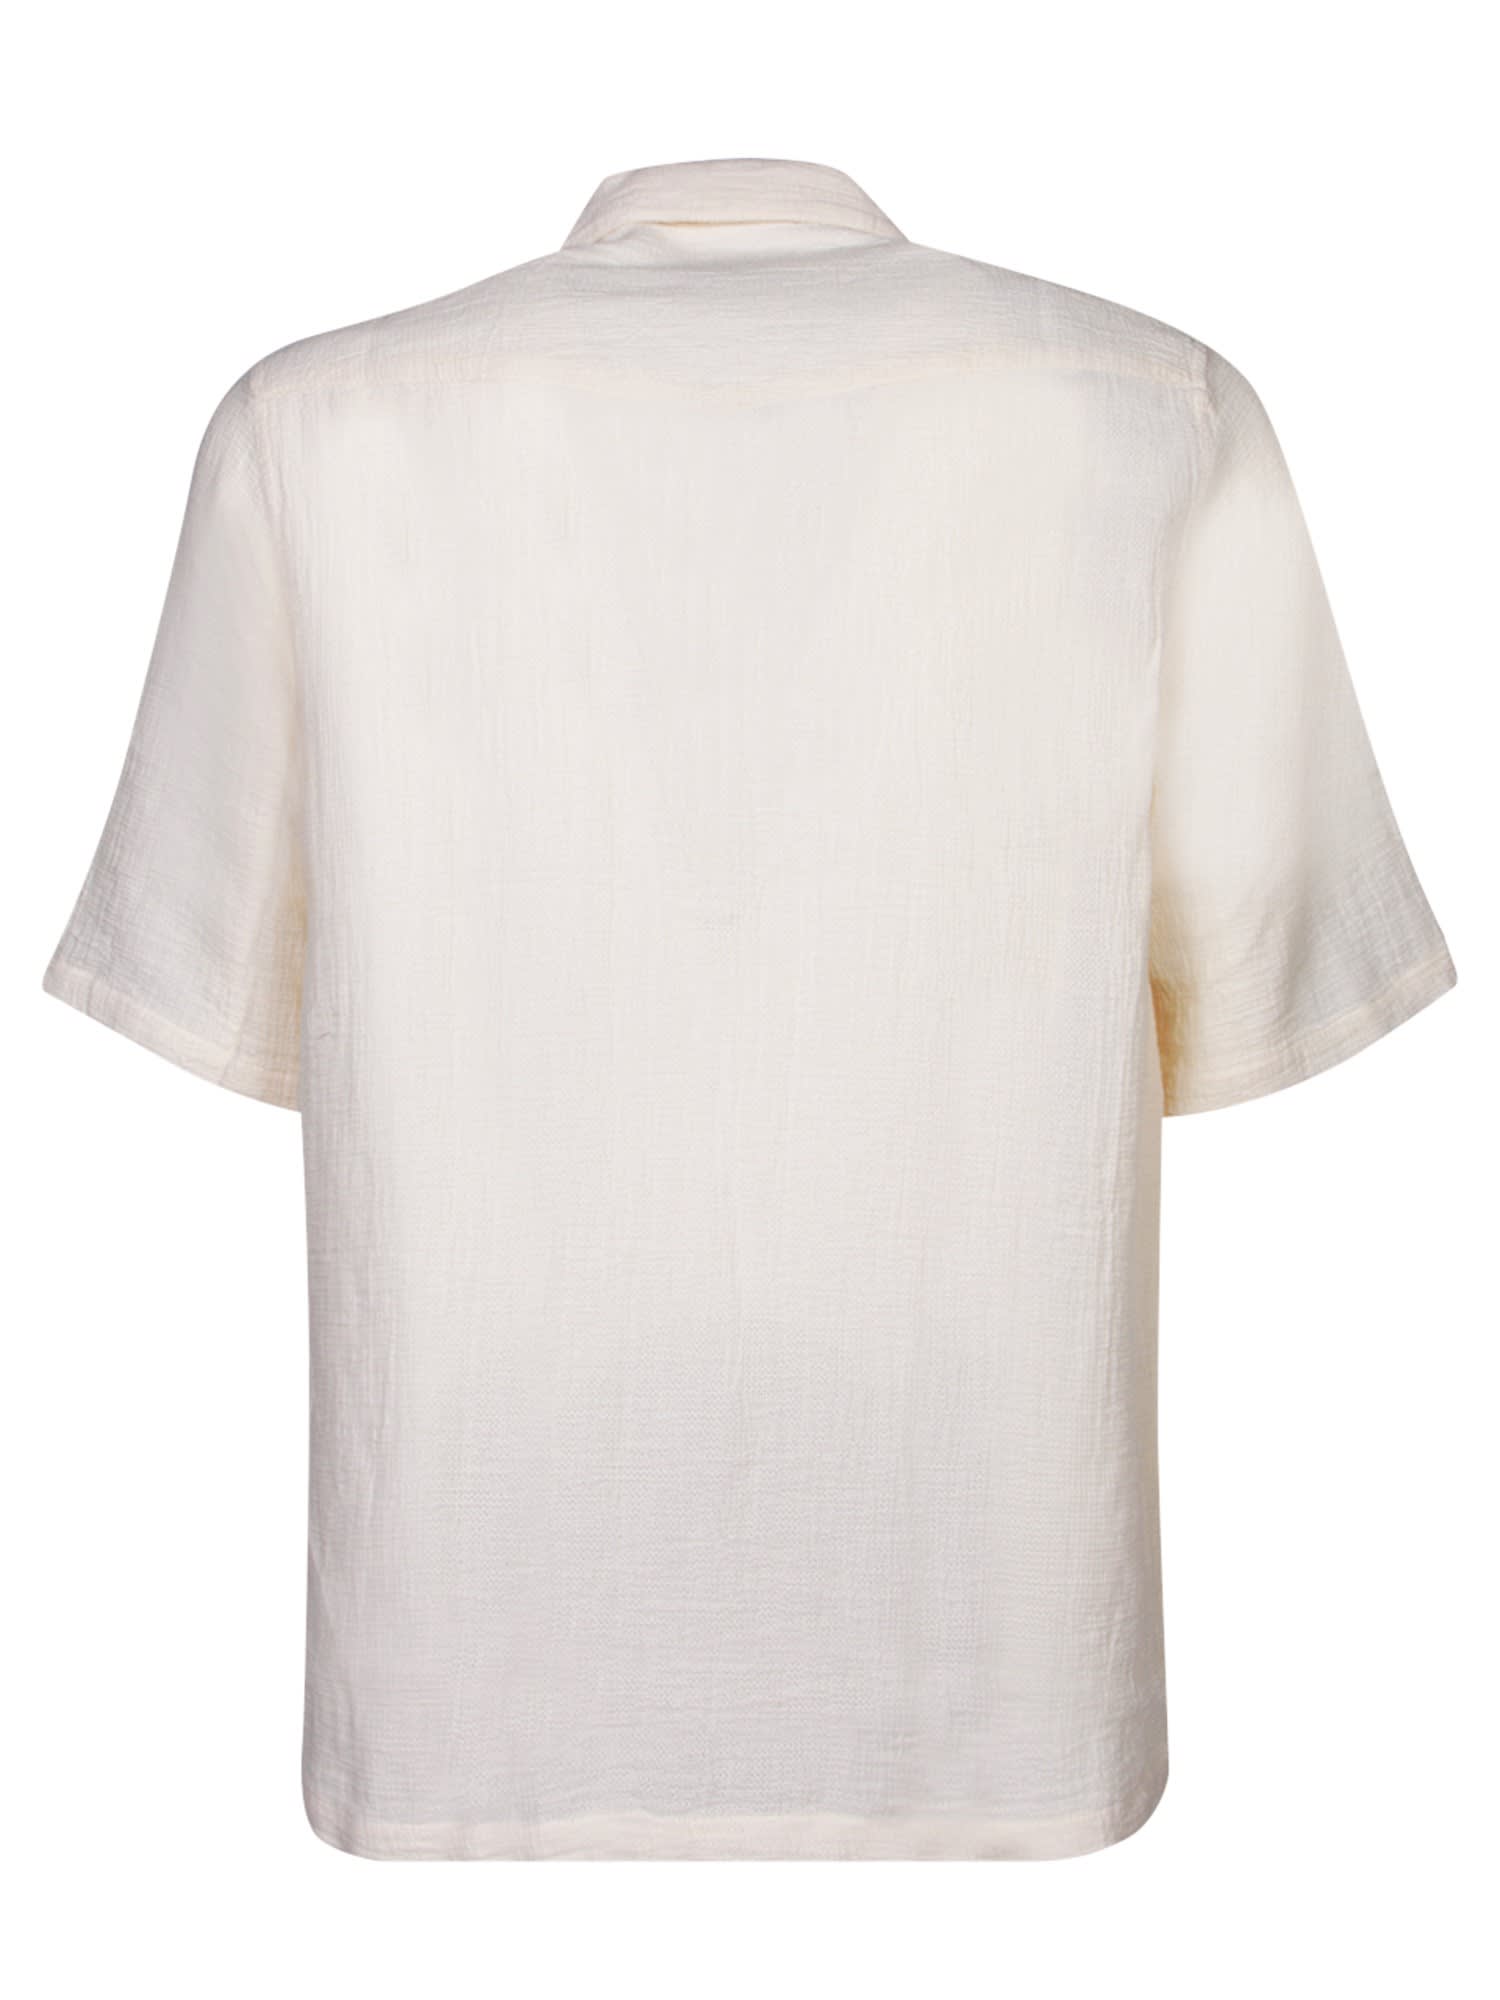 Shop Officine Generale Short Sleeves White Shirt